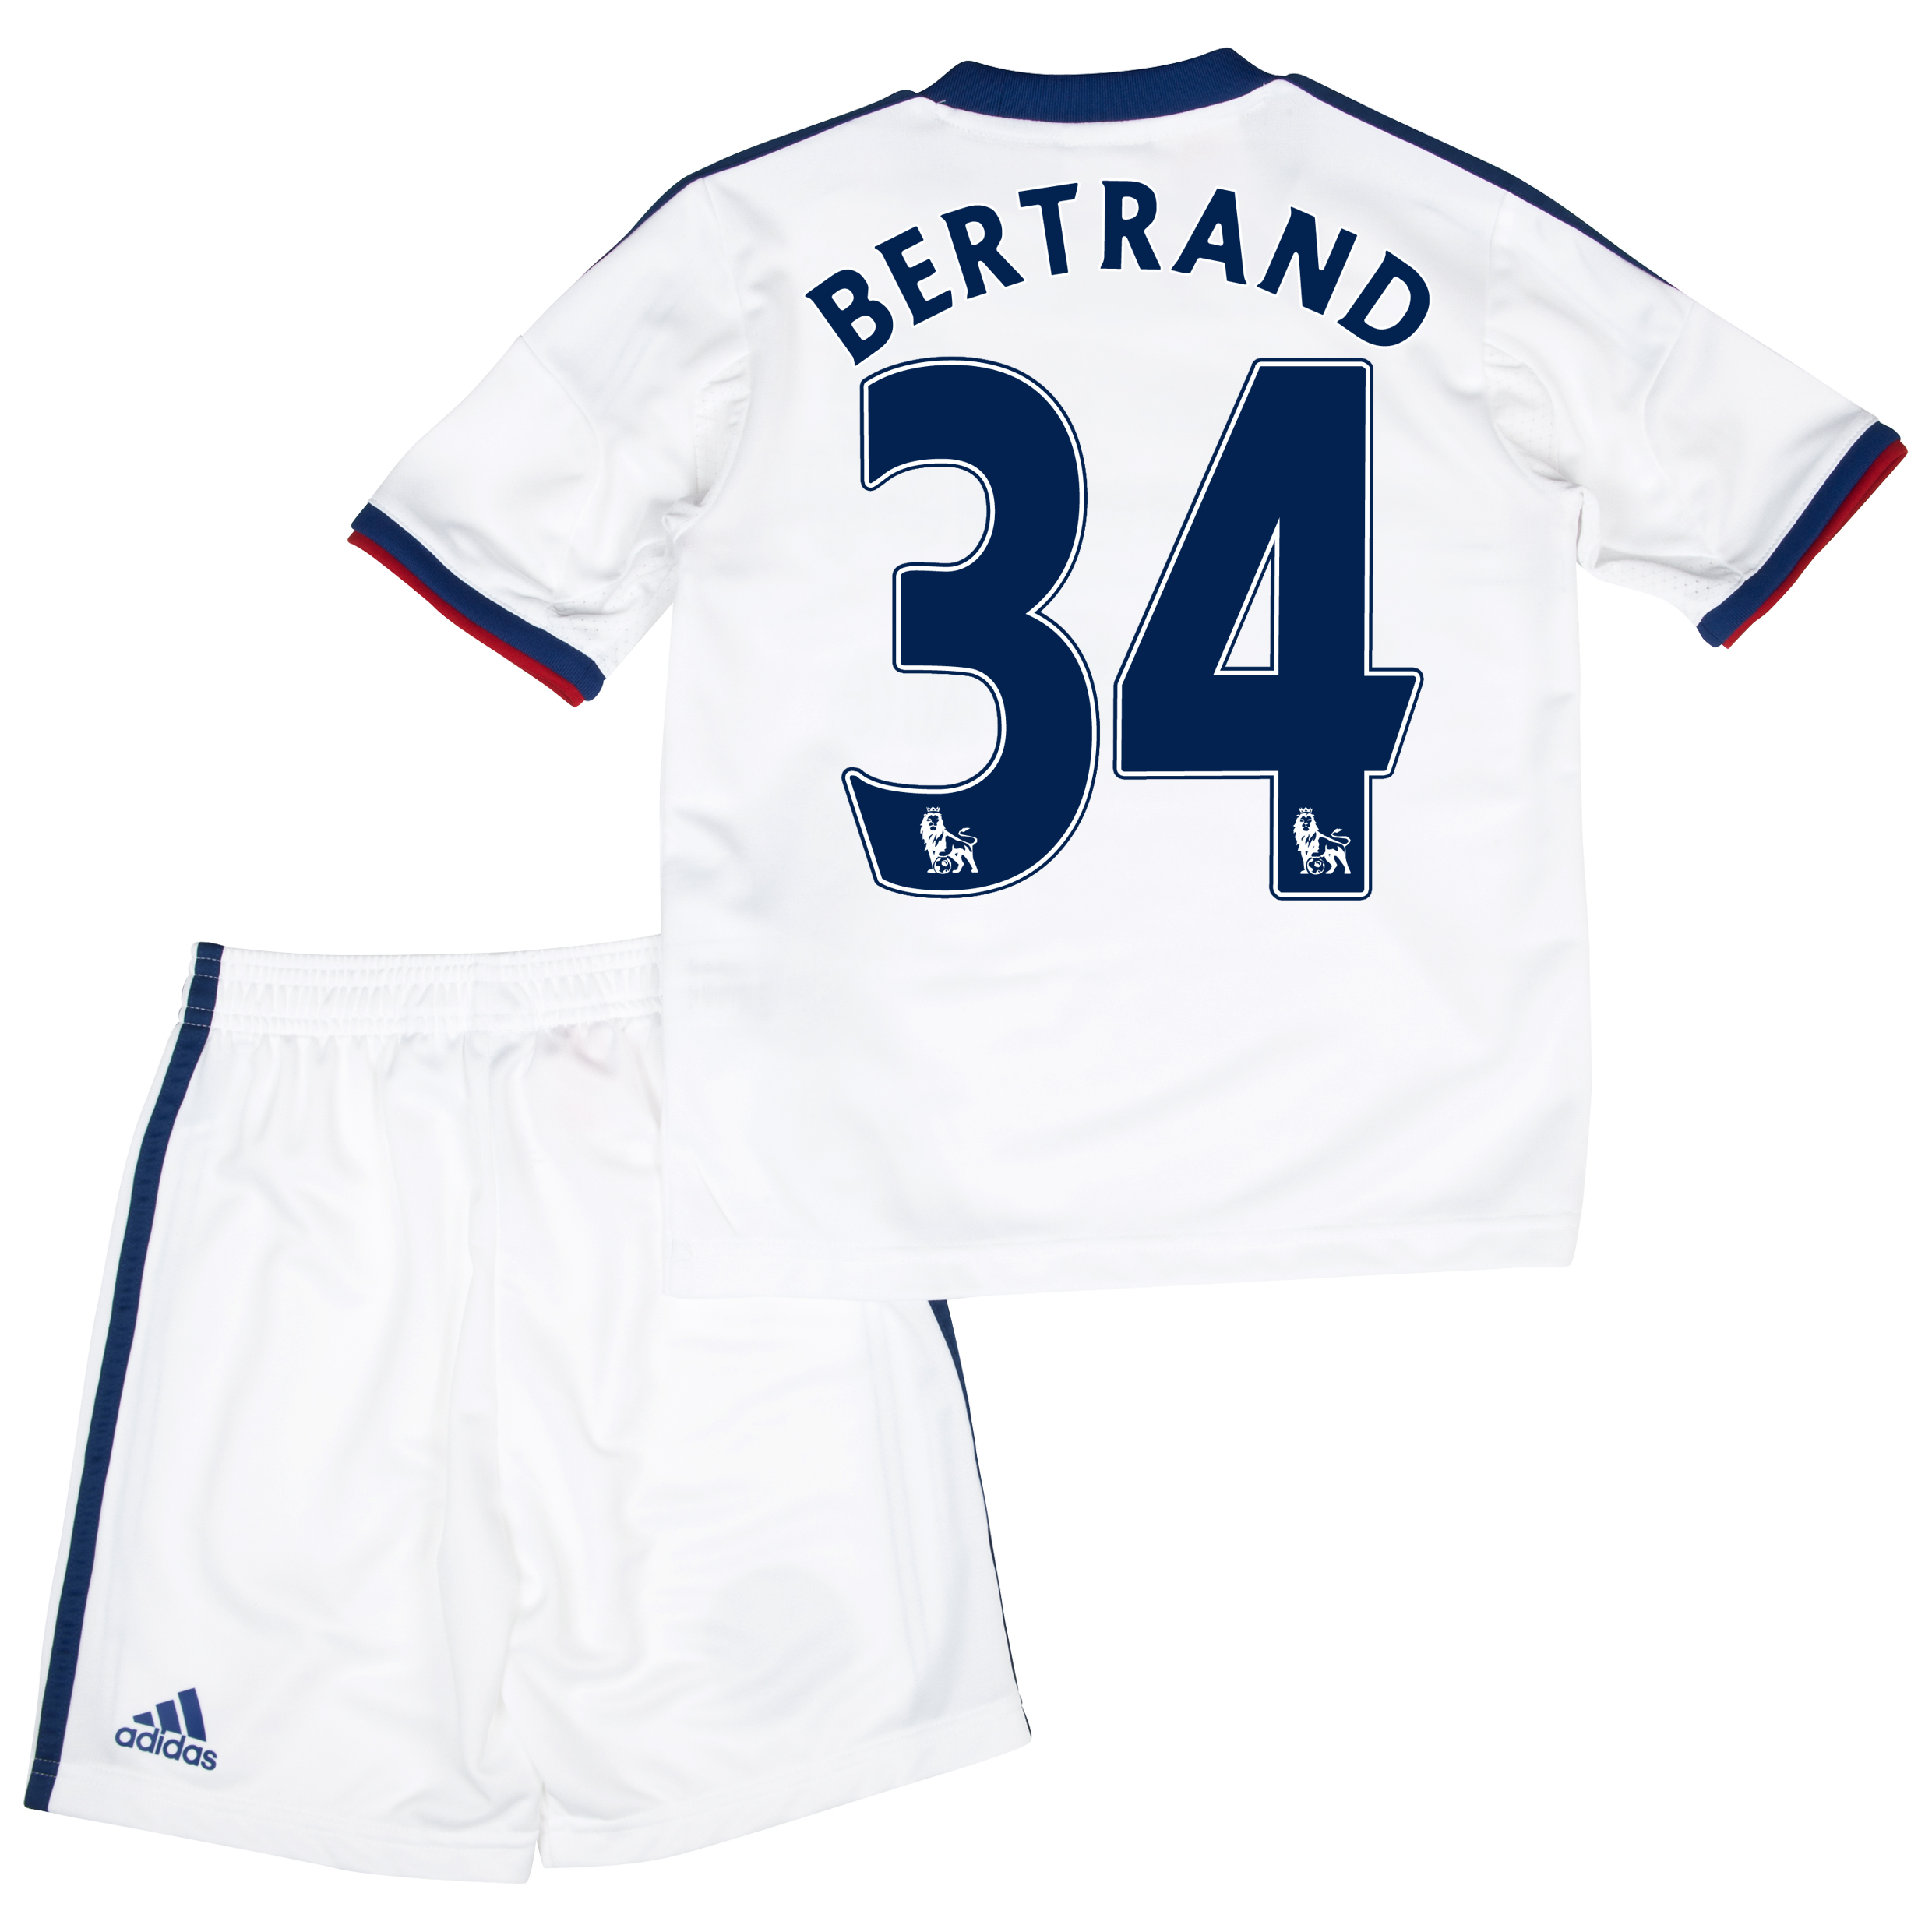 Chelsea Away Mini Kit 2013/14 with Bertrand 34 printing